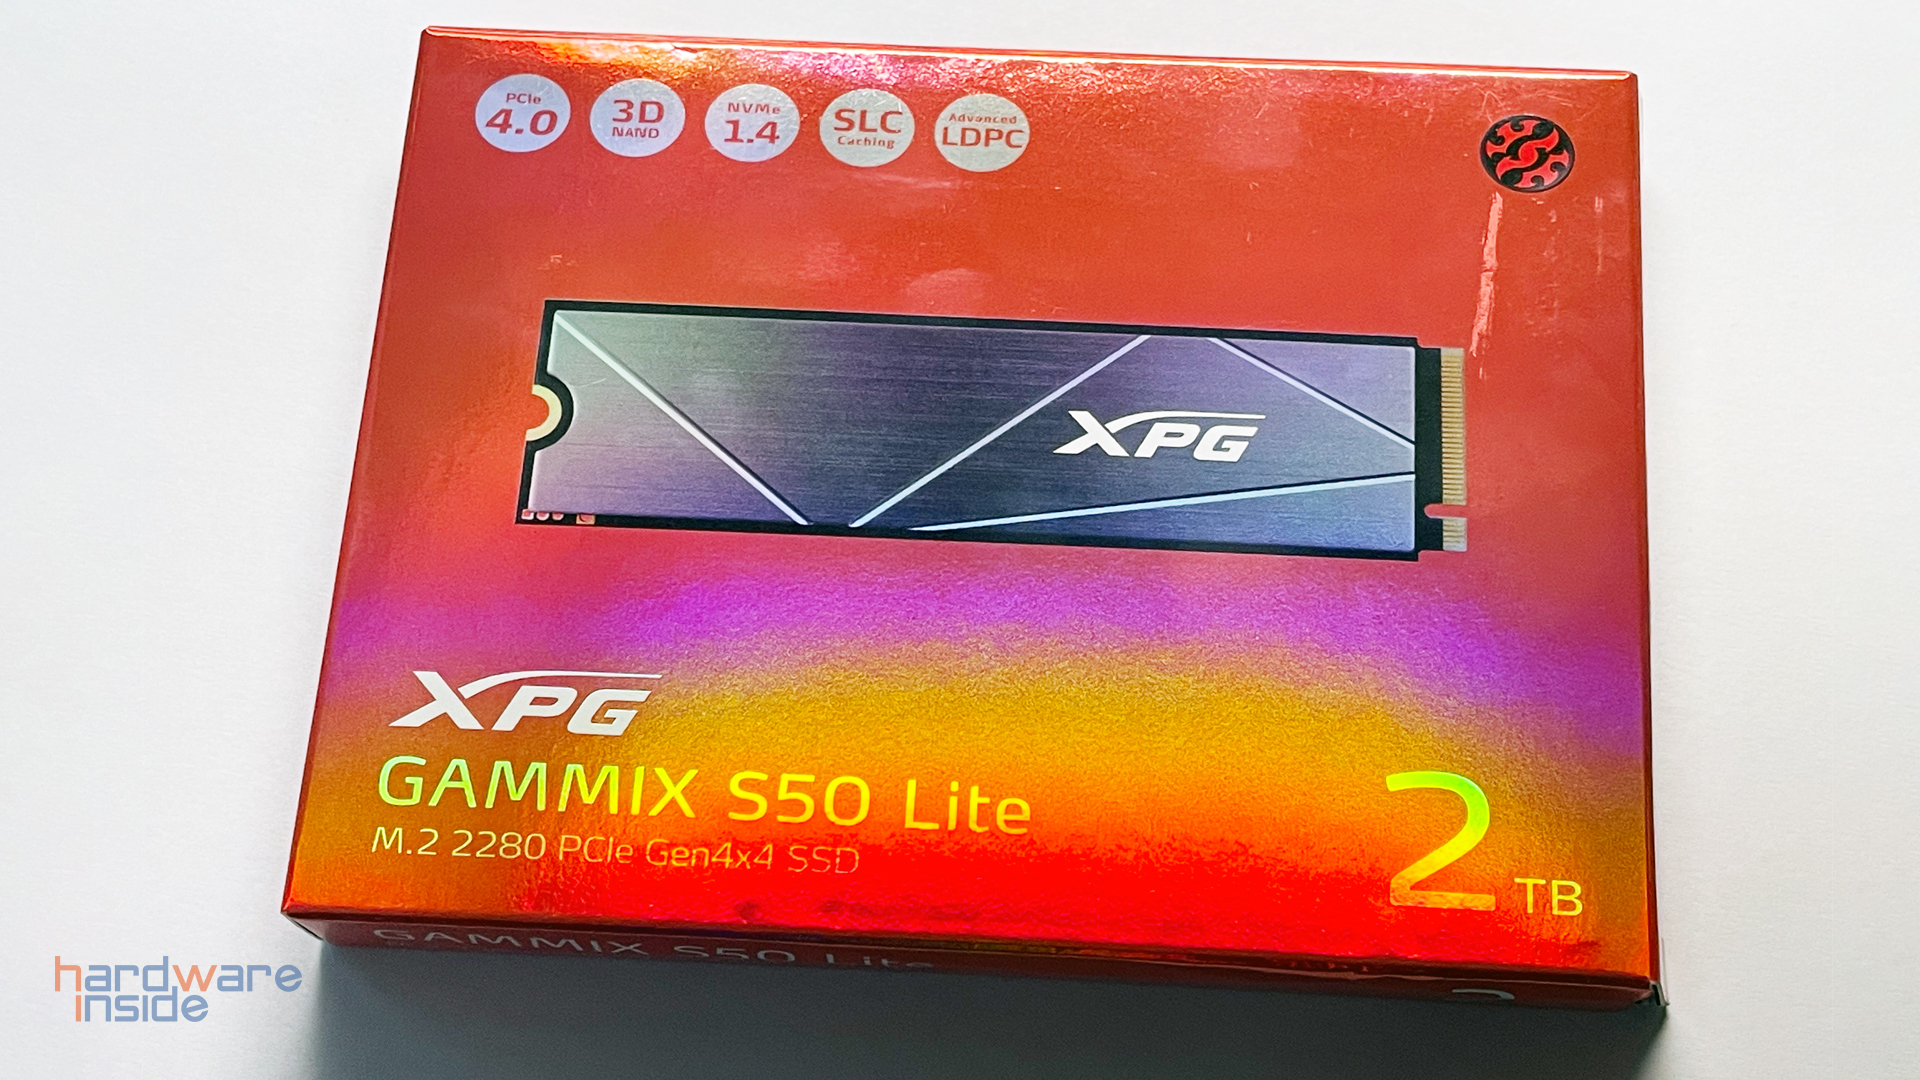 XPG_GAMMIX_S50_Lite-verpackung.jpg